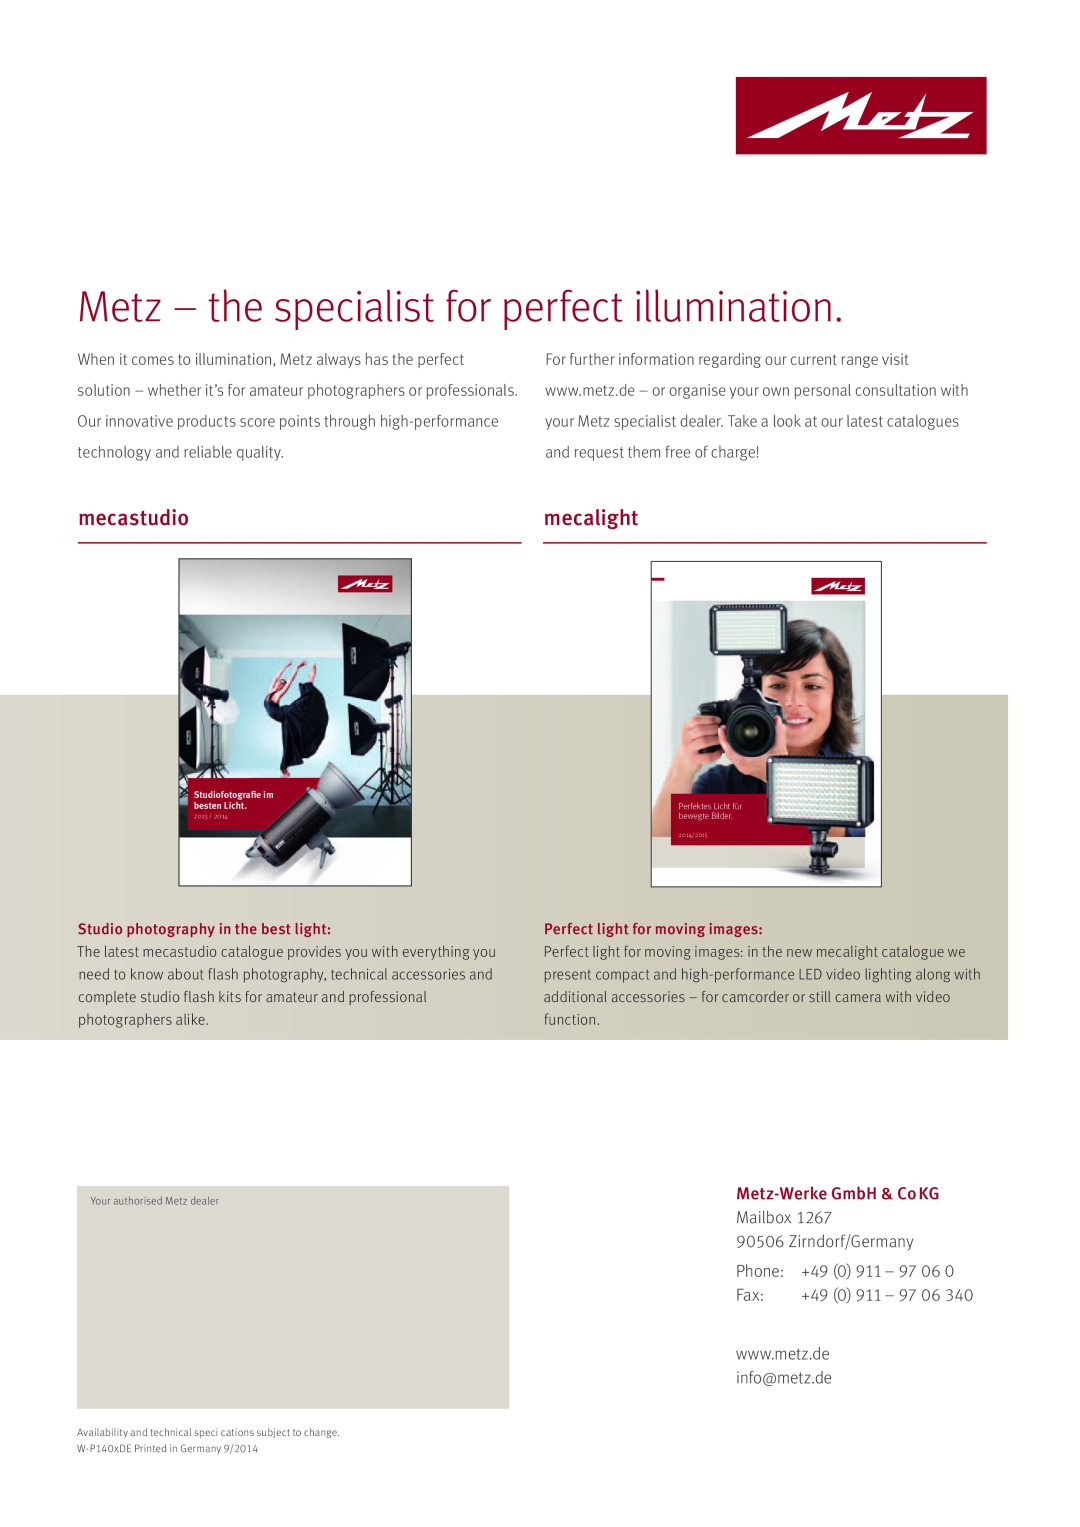 Metz MZ 44314N manual Metz - the specialist for perfect illumination, mecastudio, mecalight, Metz-Werke GmbH & Co KG, Phone 